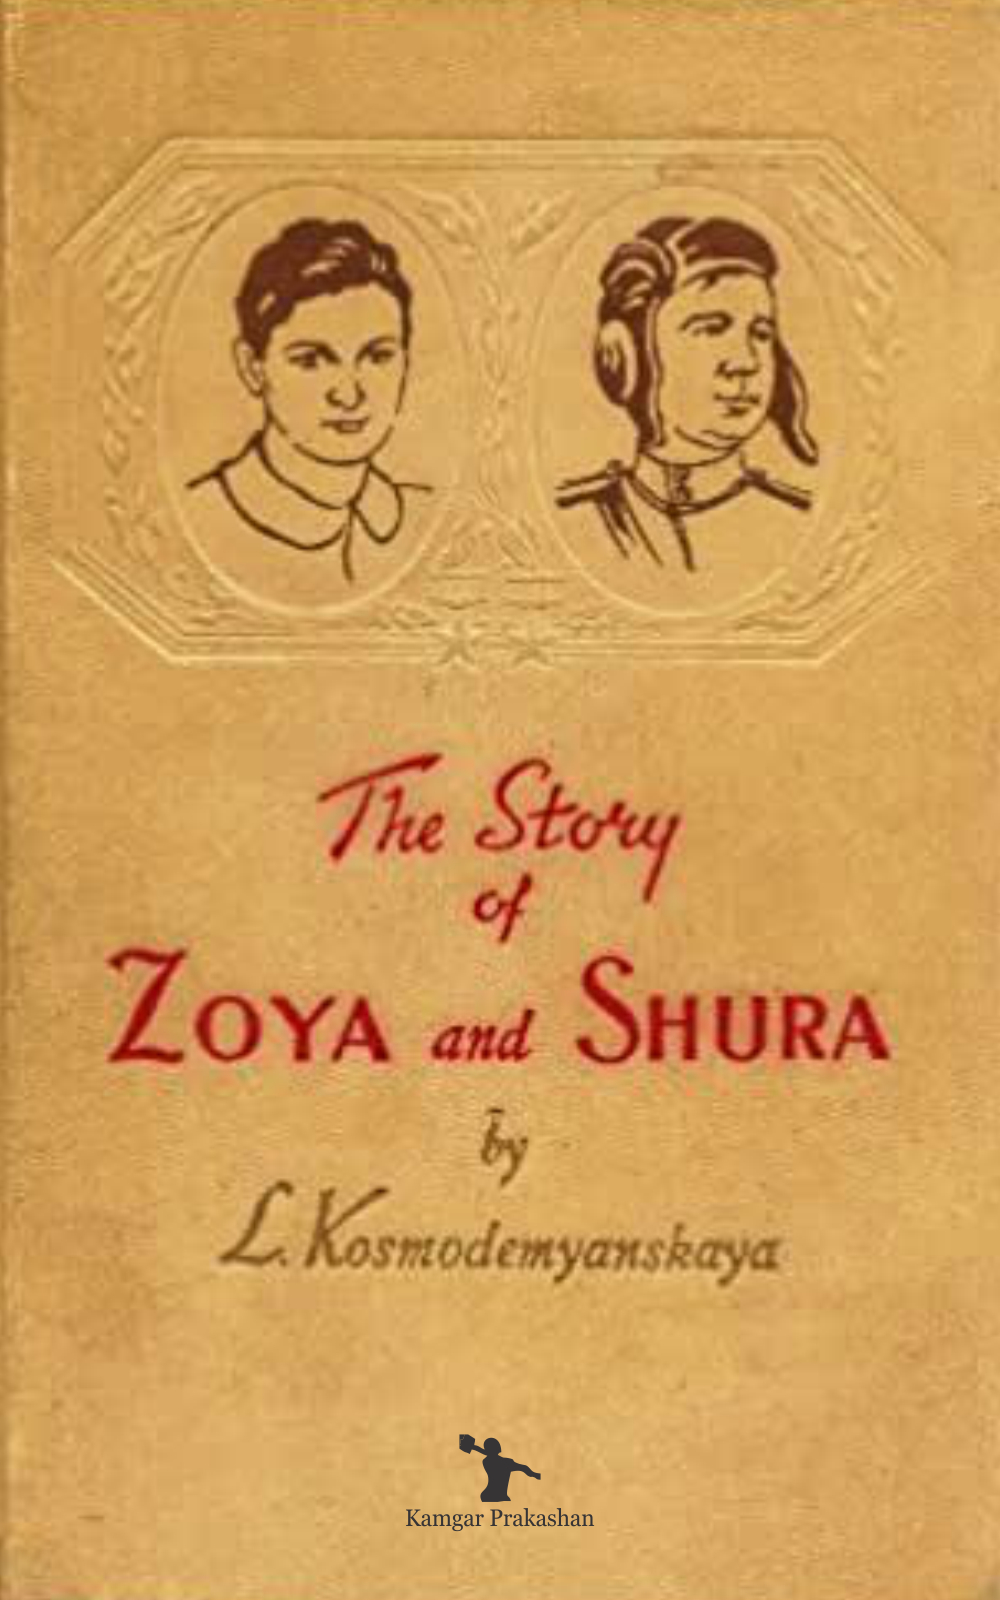 THE STORY OF ZOYA AND SHURA